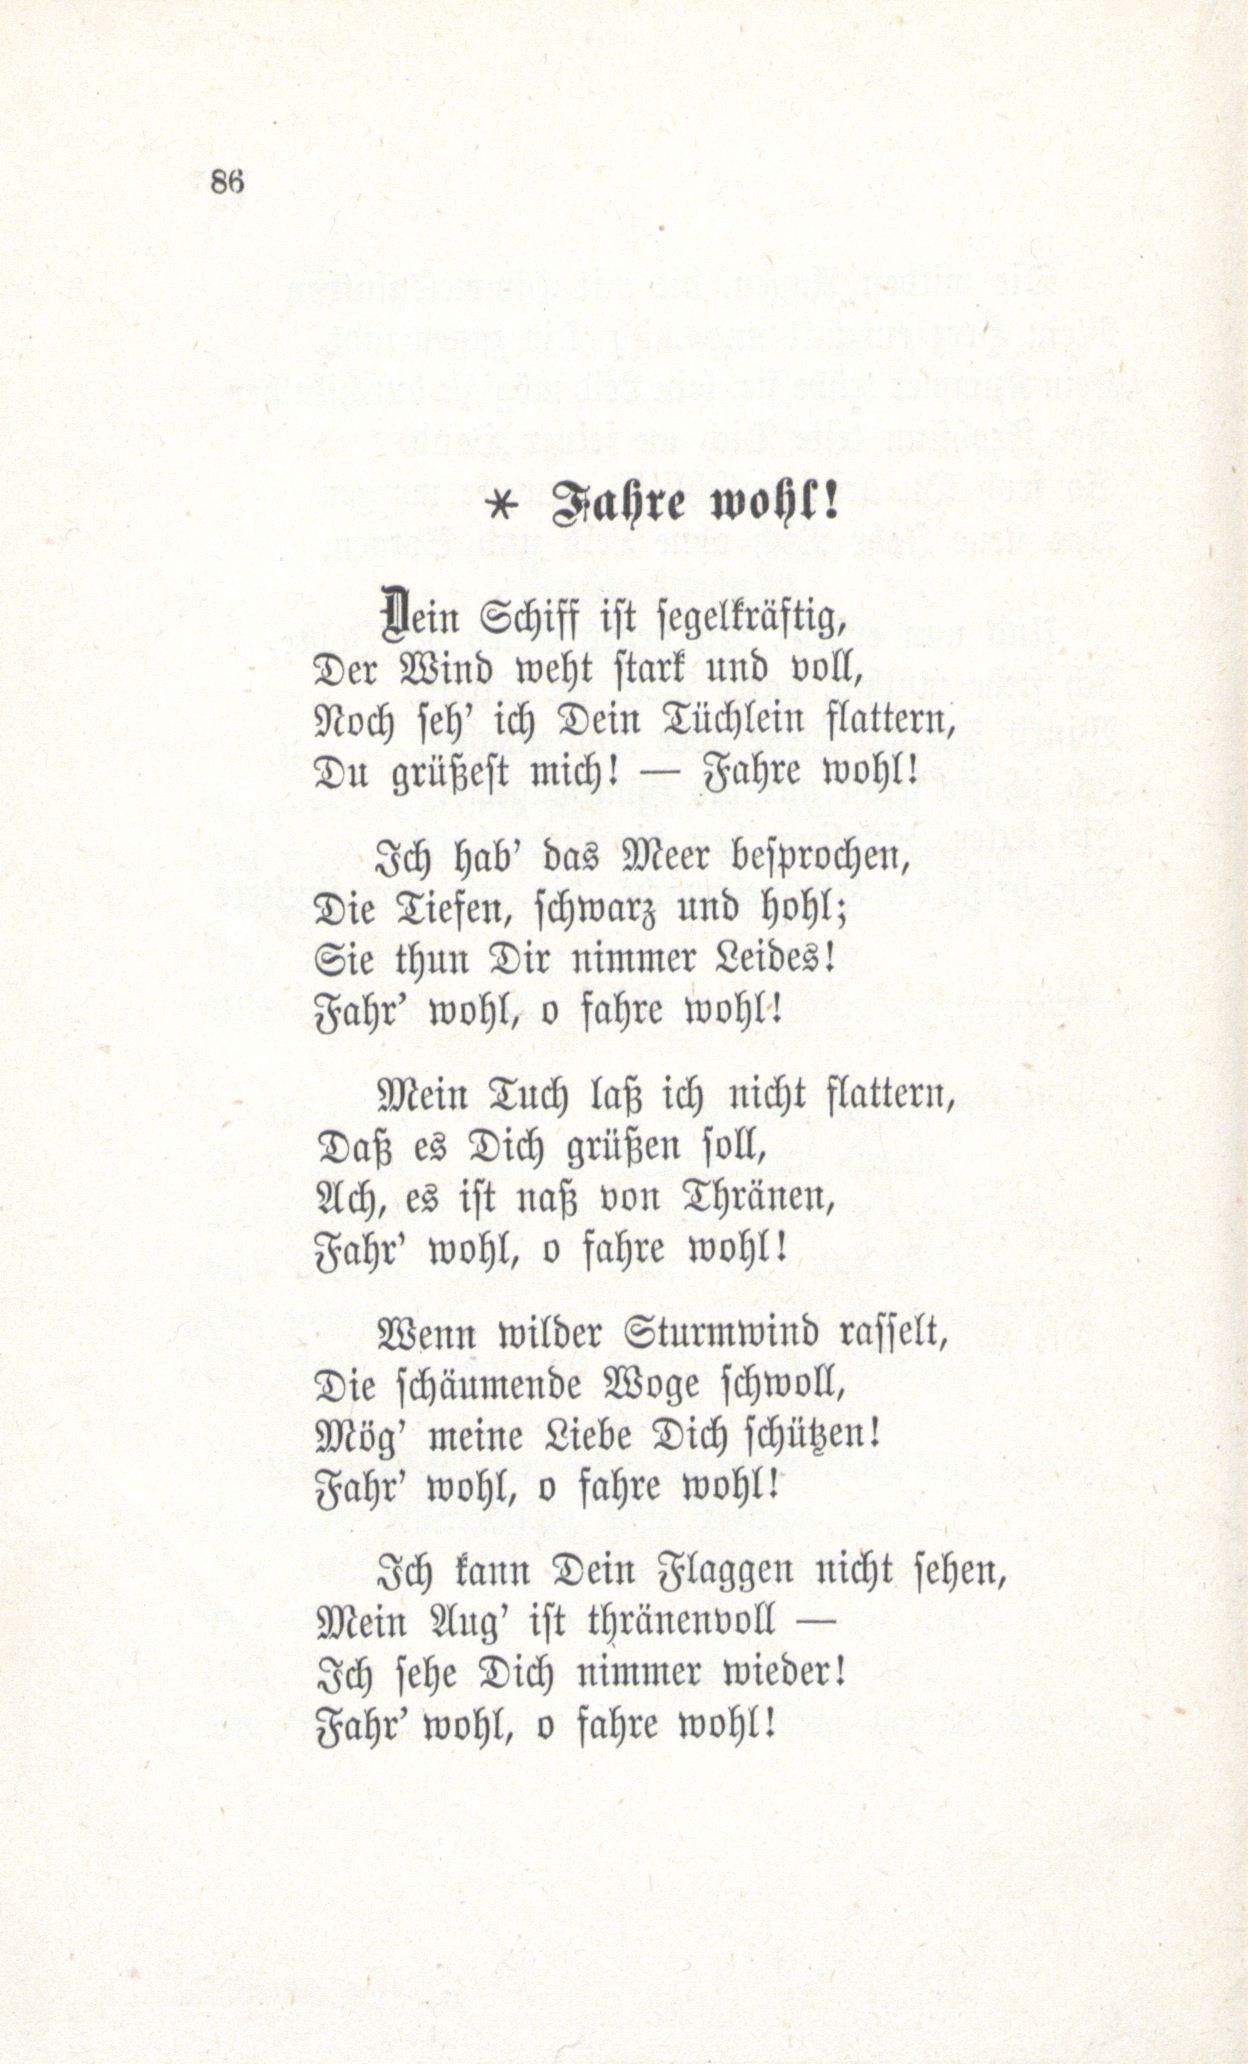 Erinnerung an die Fraternitas (1880) | 87. (86) Main body of text